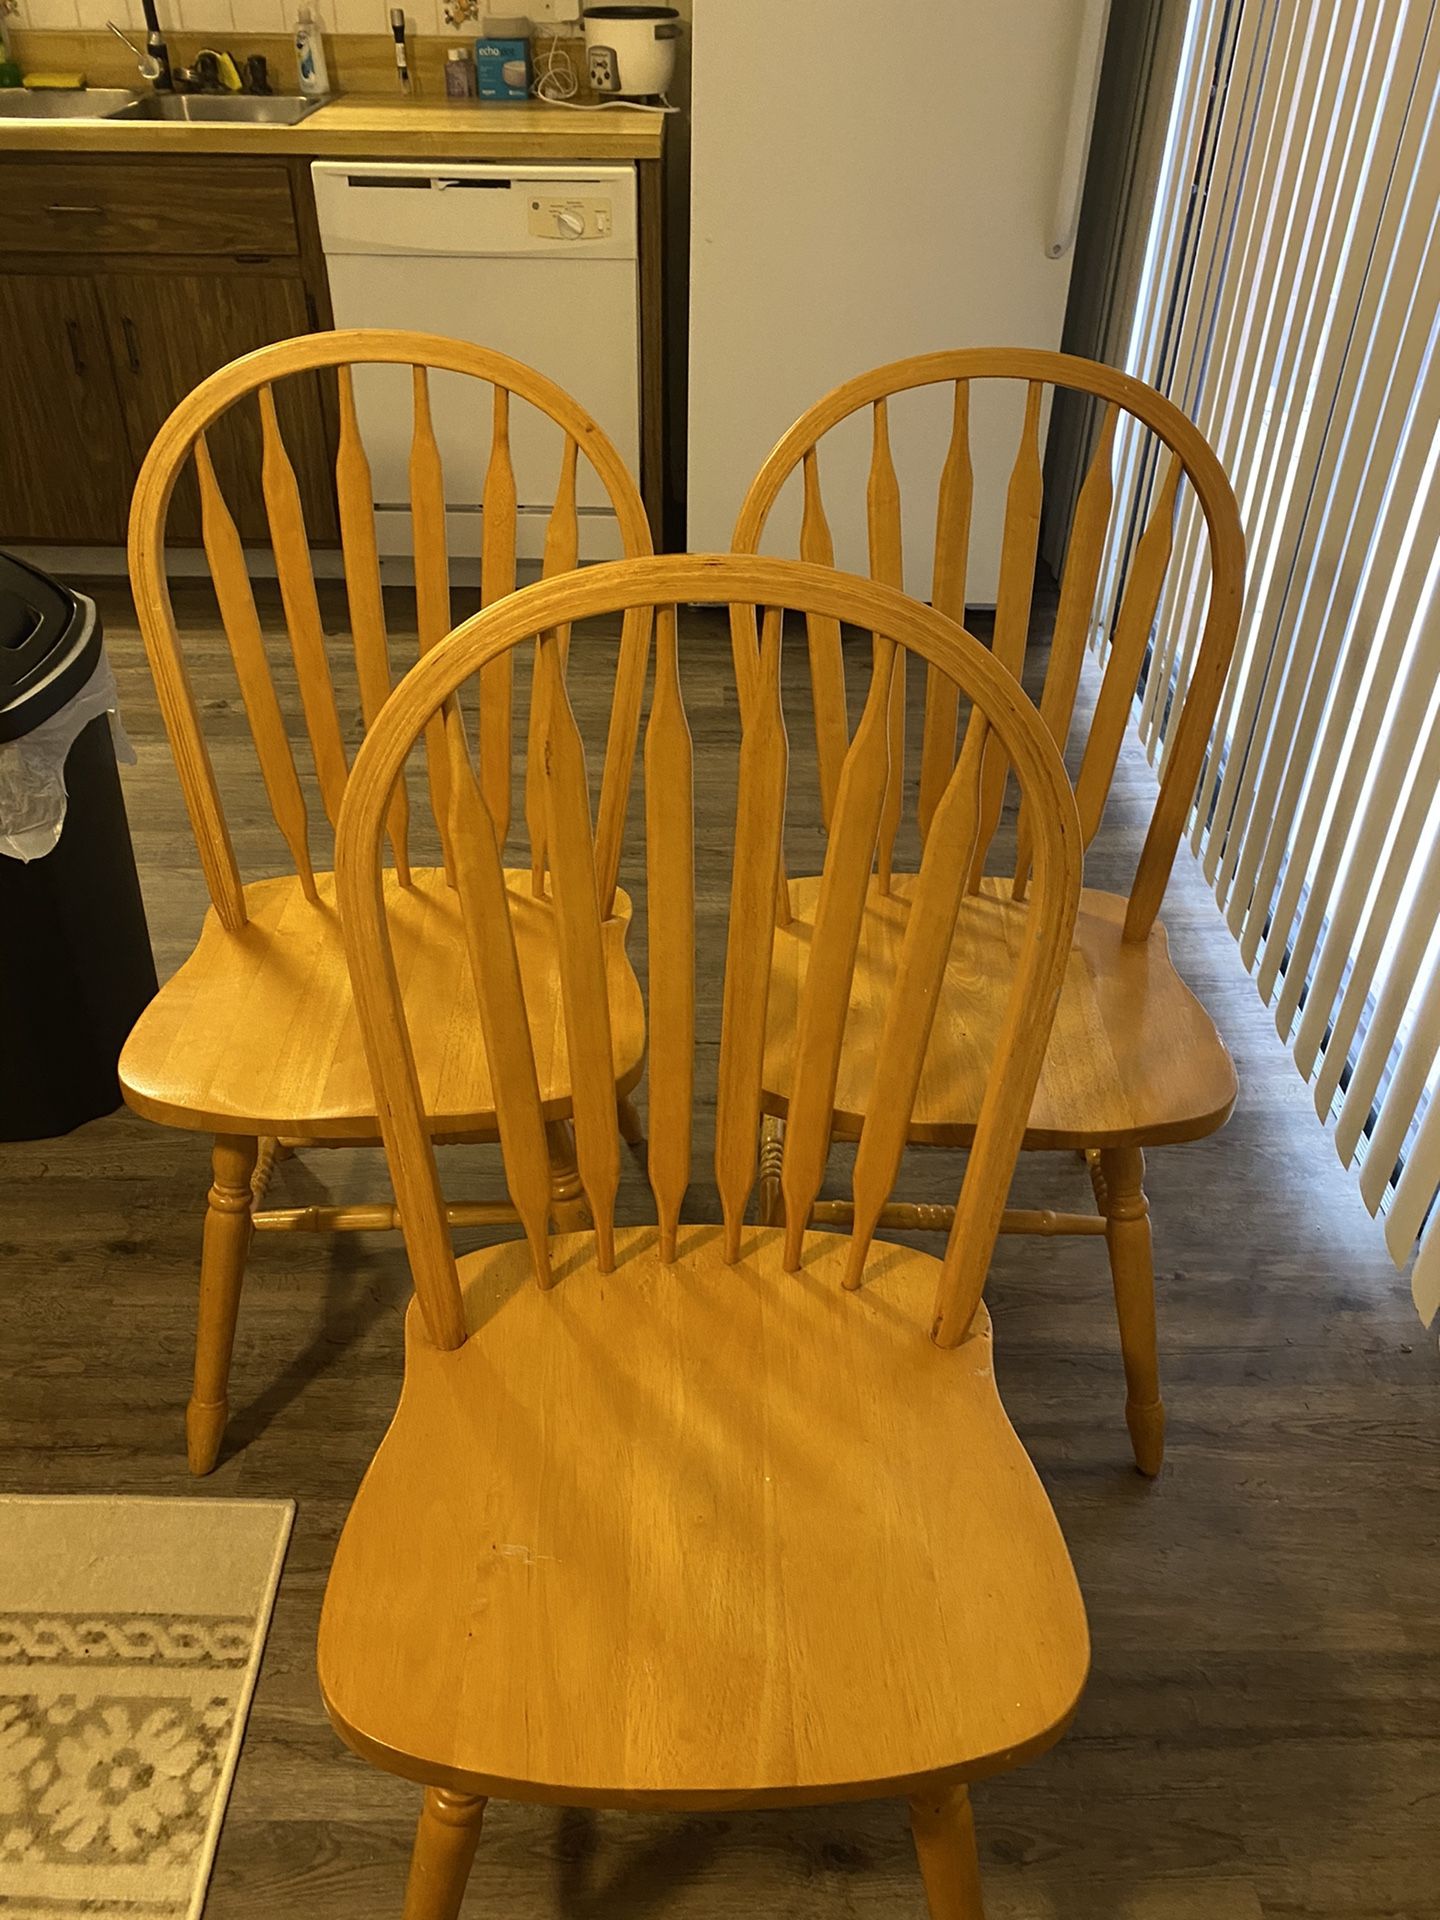 (3) Oakwood Chairs $20